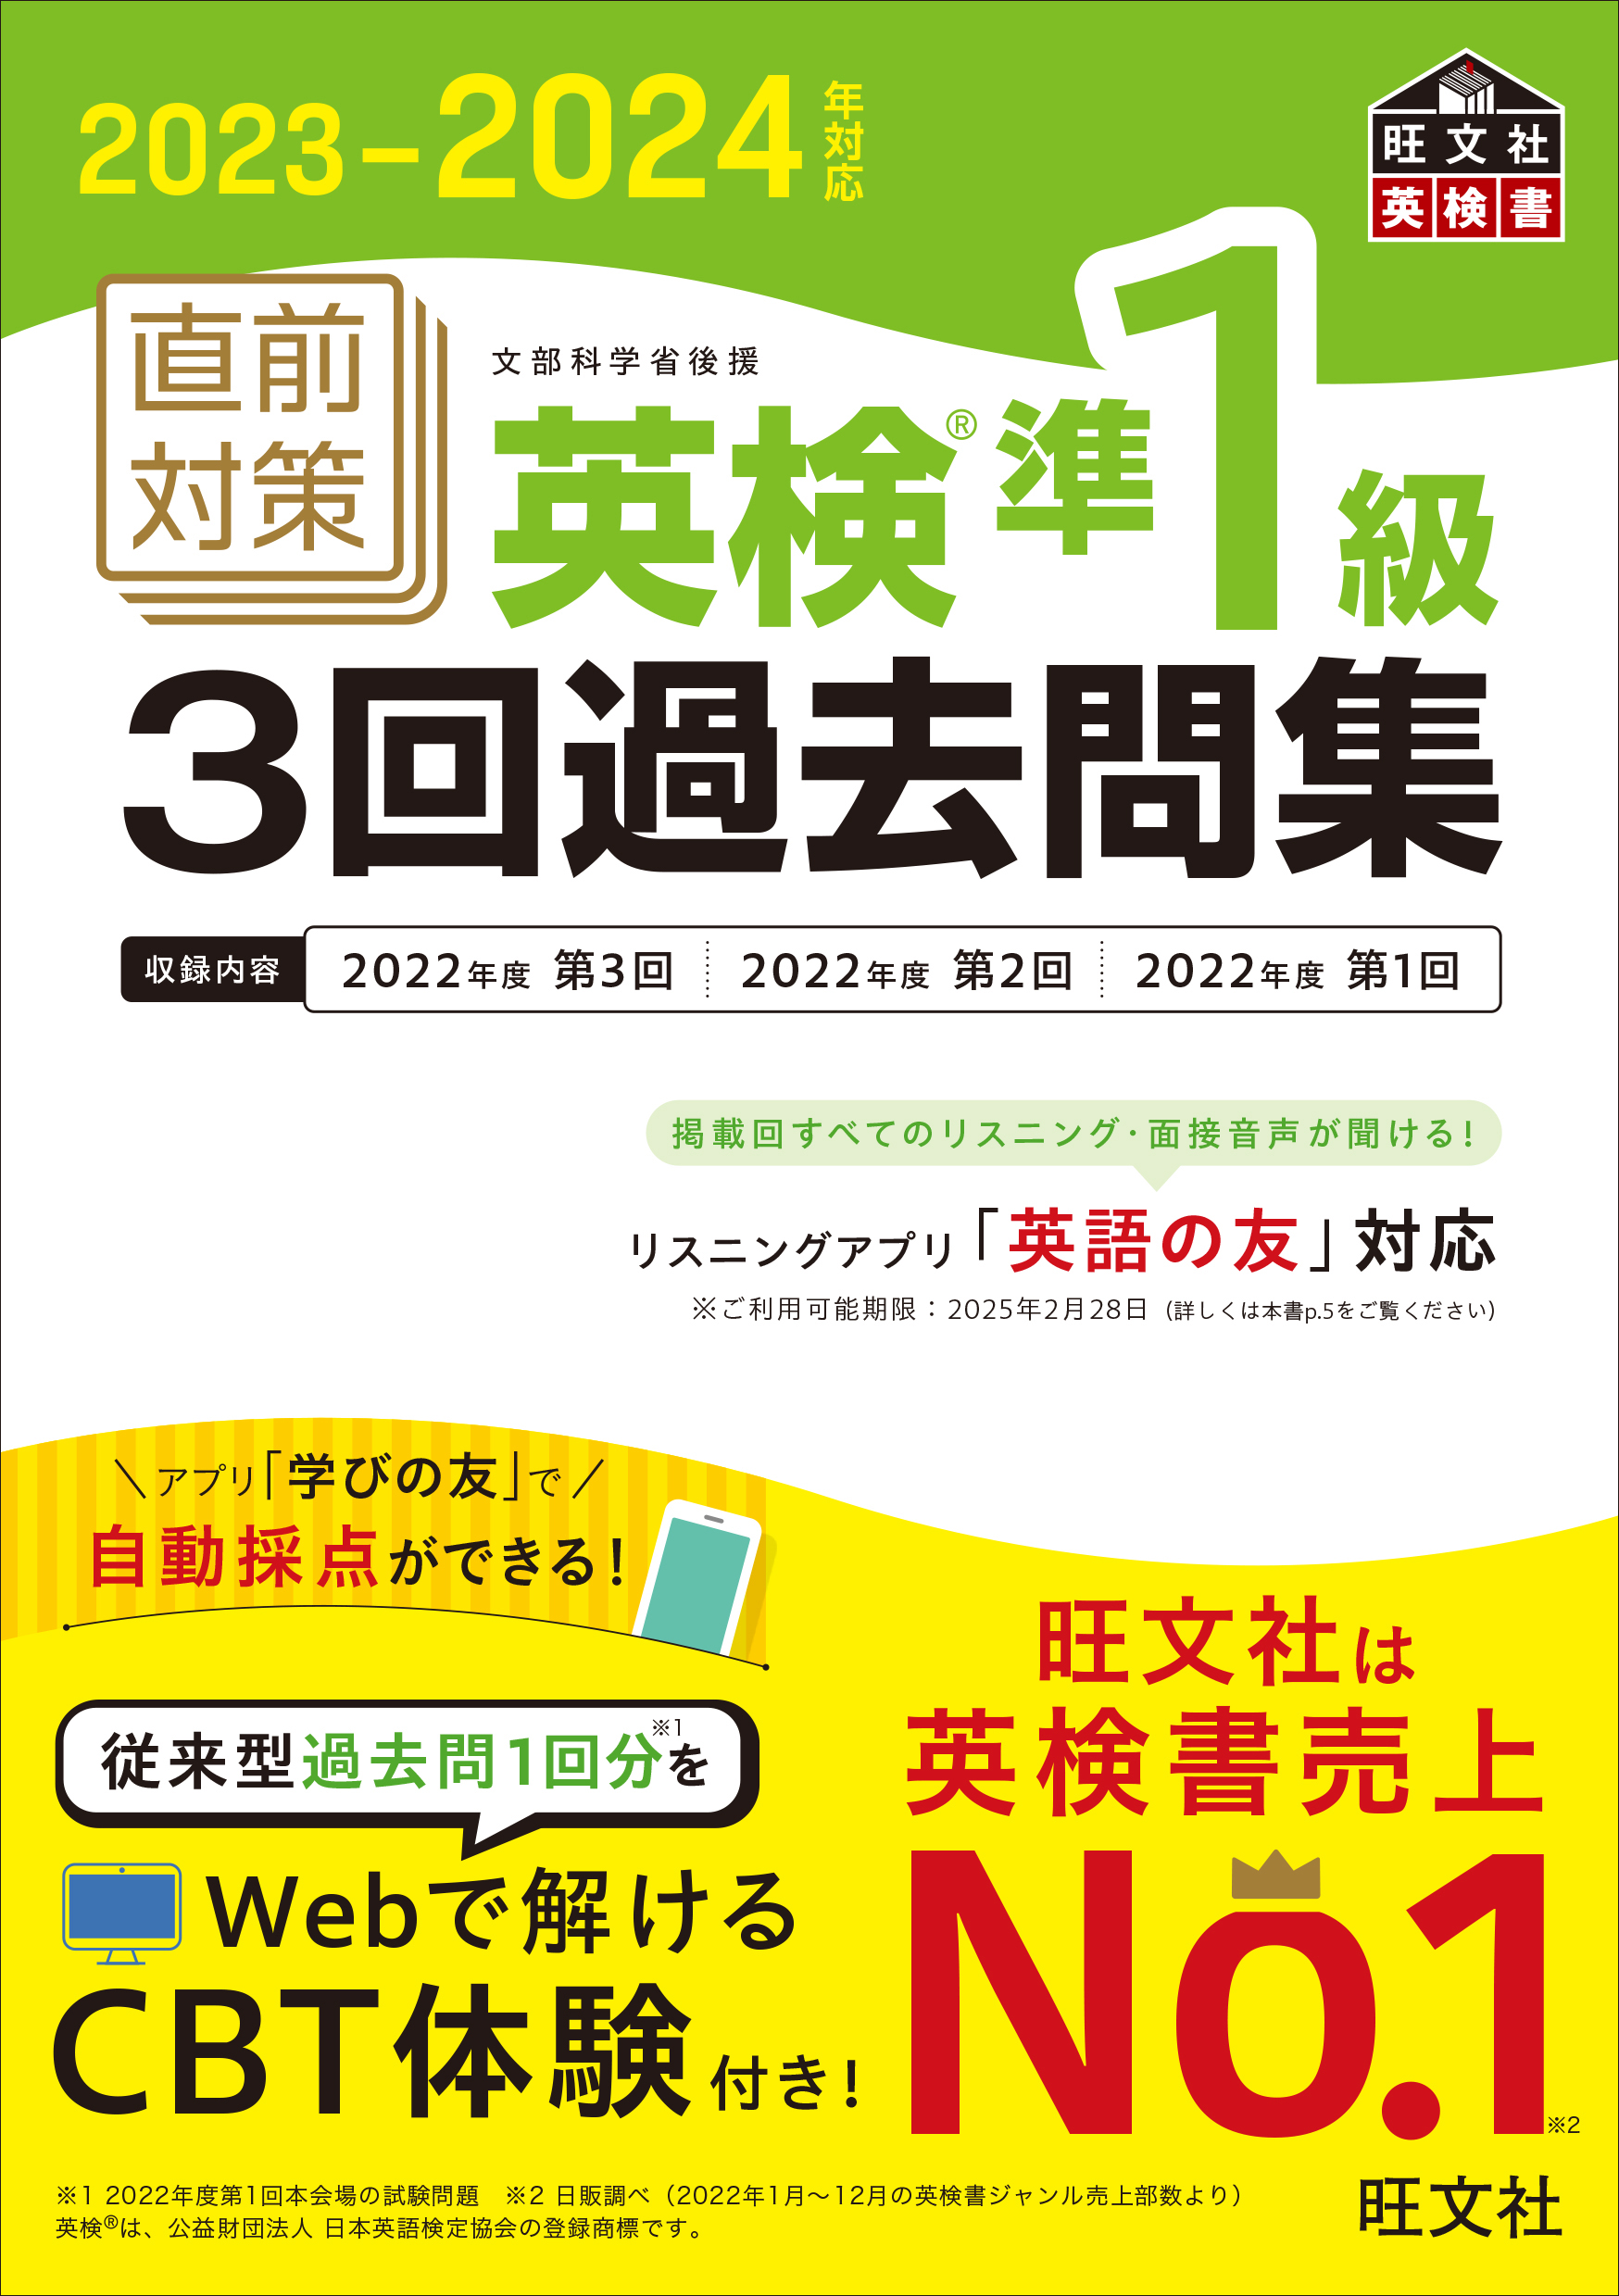 英検®︎準1級 Web特典・アプリ 対応書籍